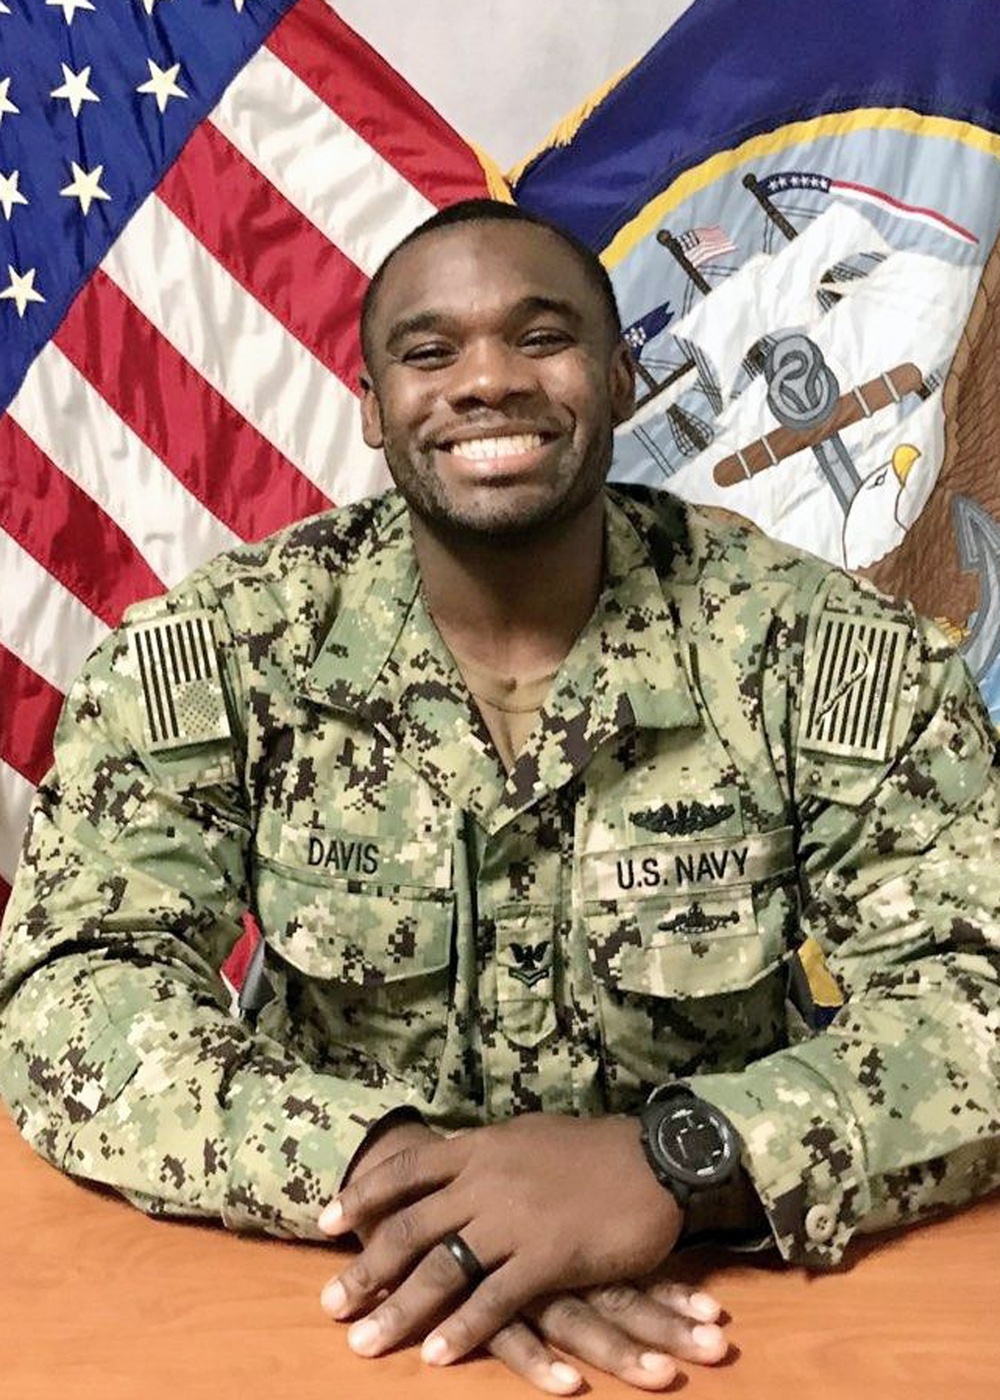 Navy Recruiter performs Life-saving Skills on Shooting Victim